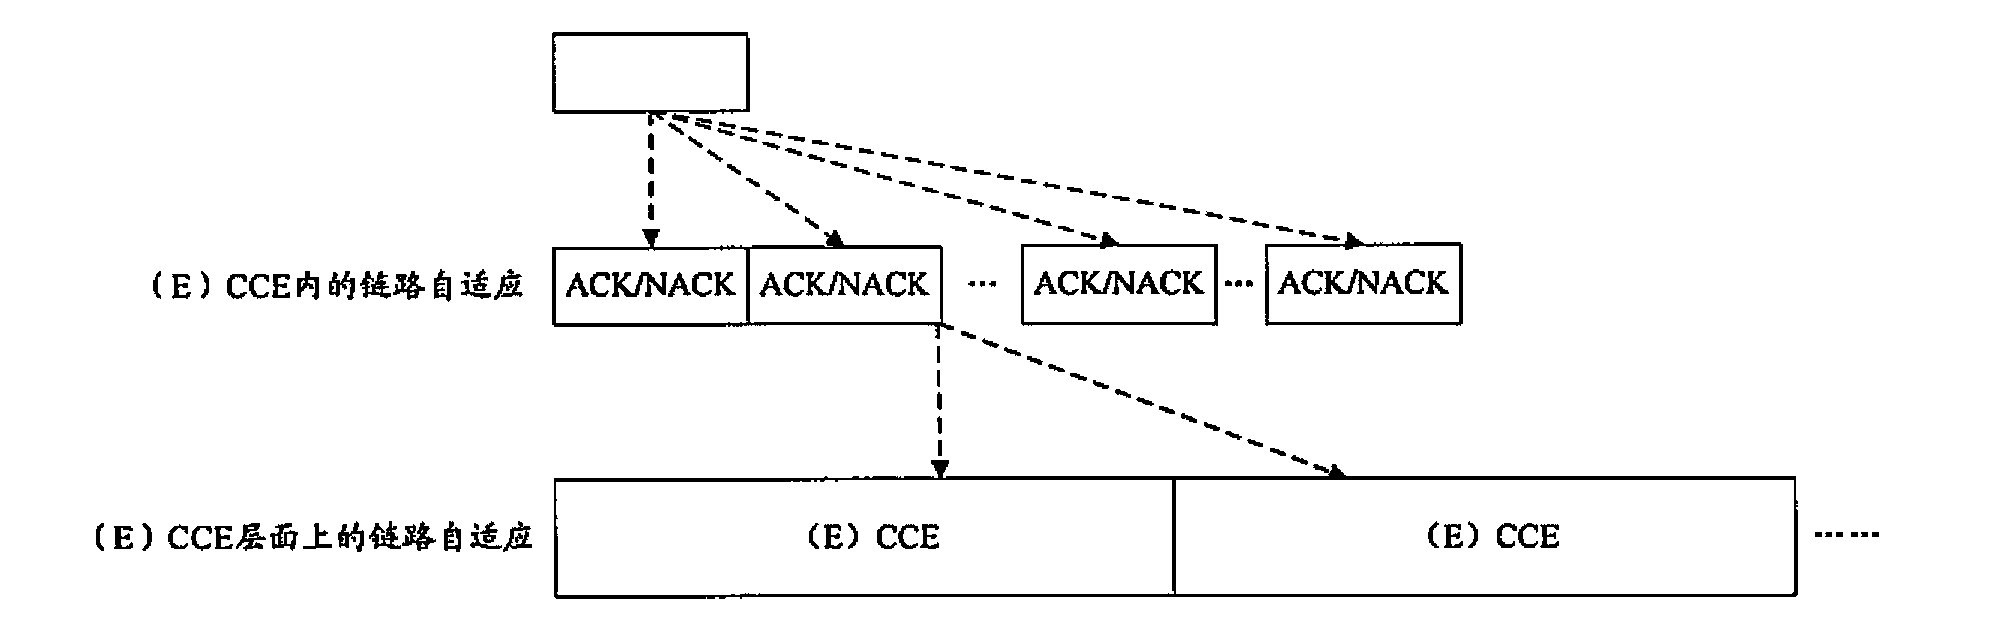 Method for transmitting ACK/NACK messages